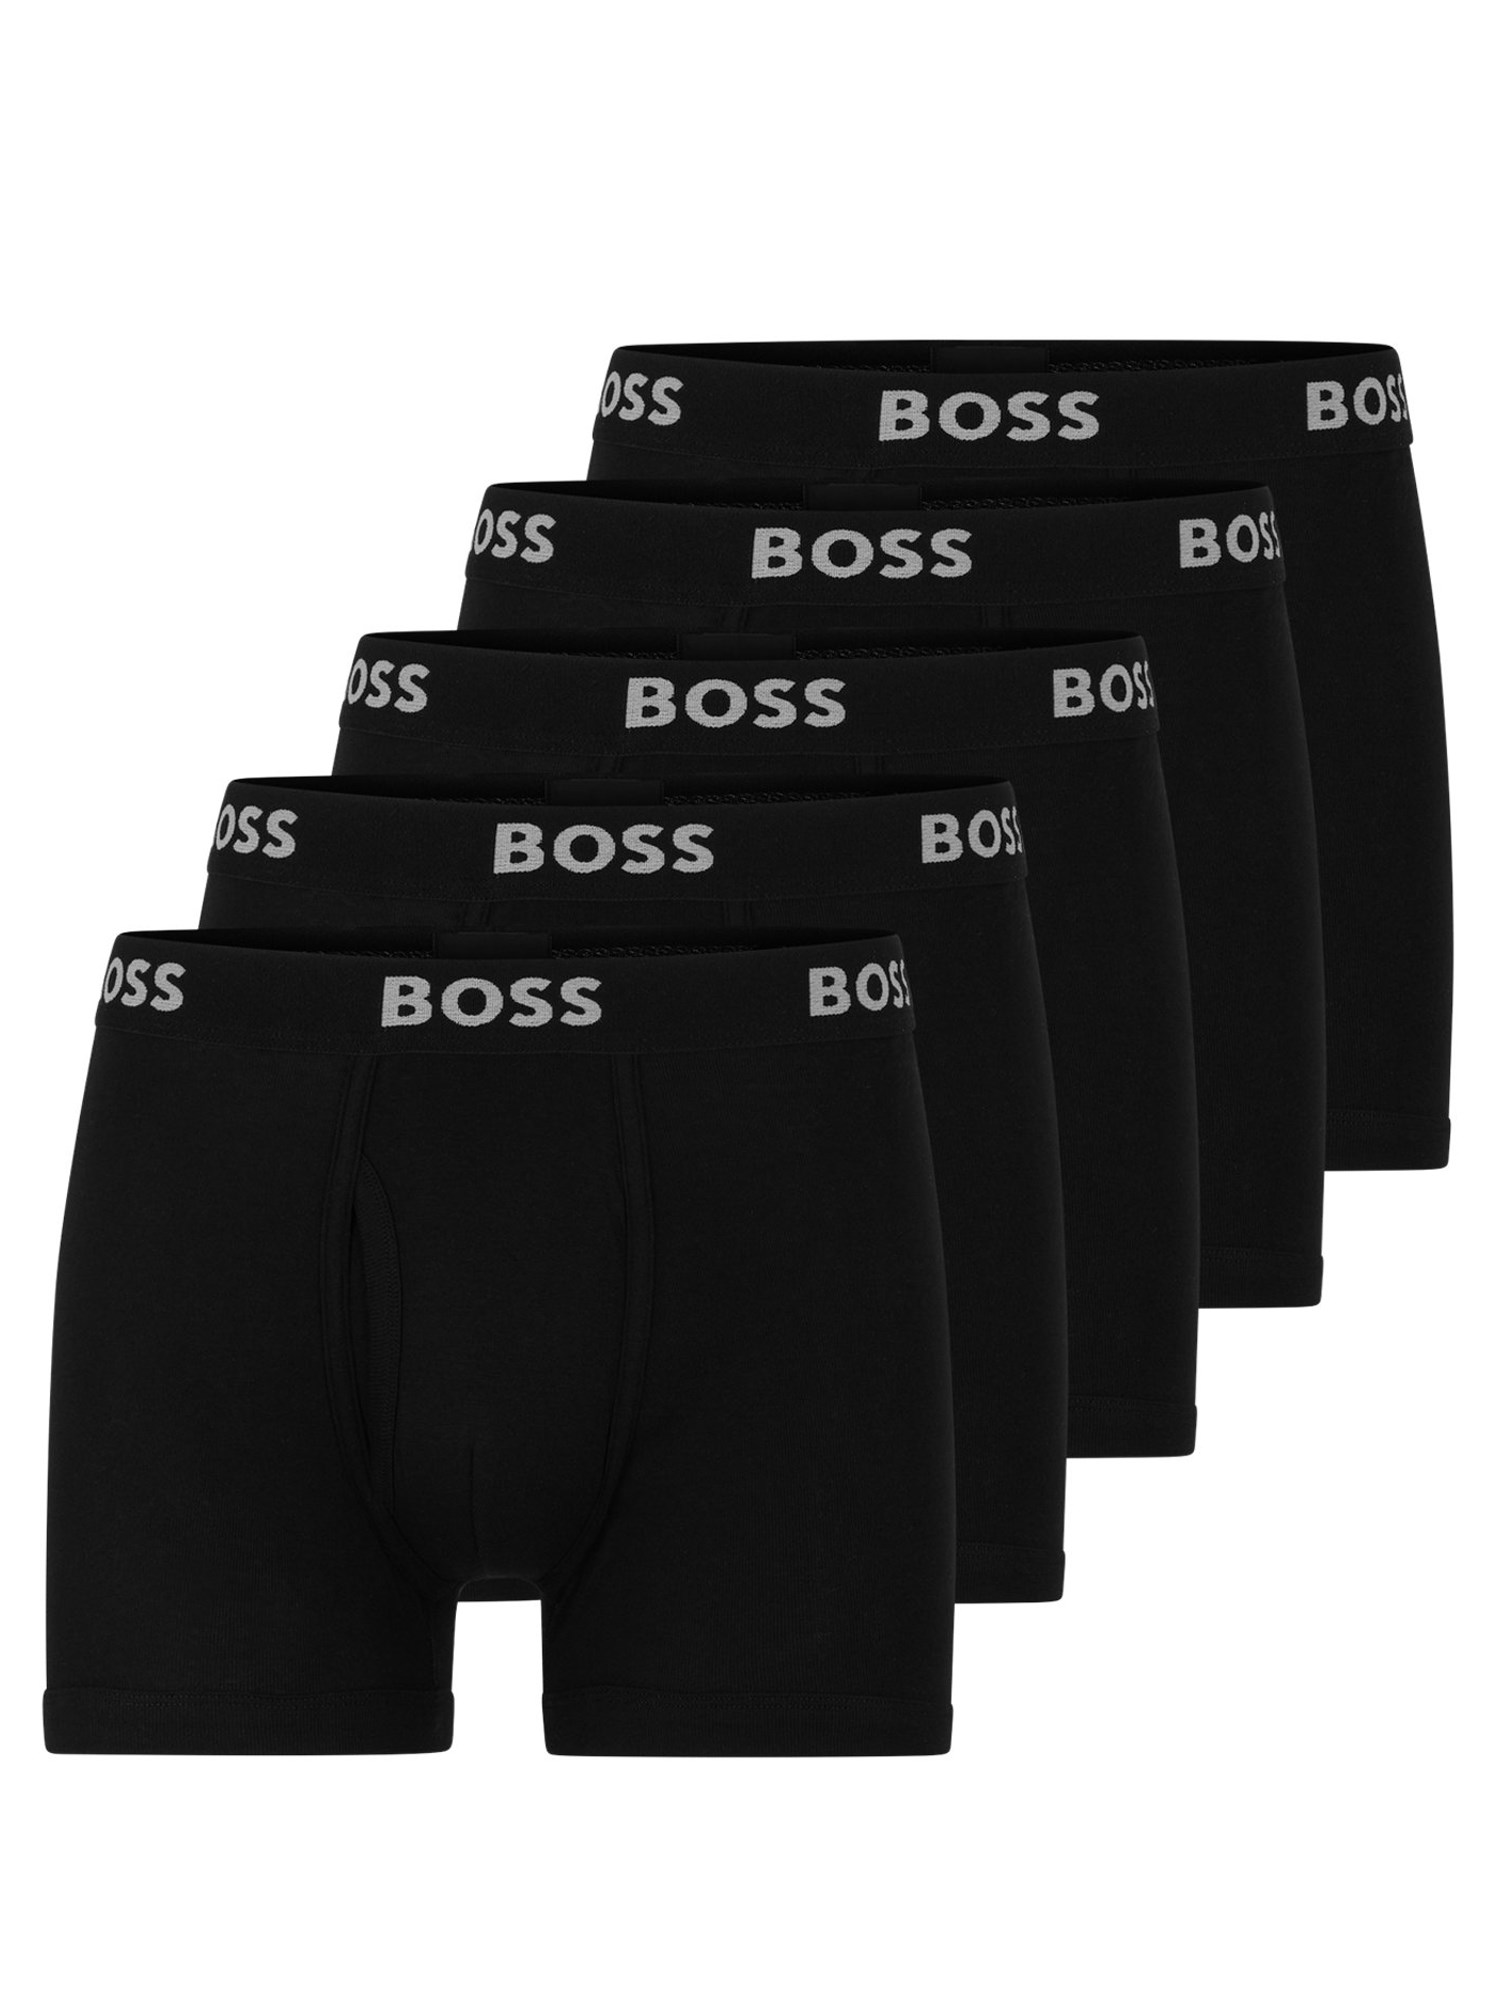 BOSS boss pack of five boxer shorts